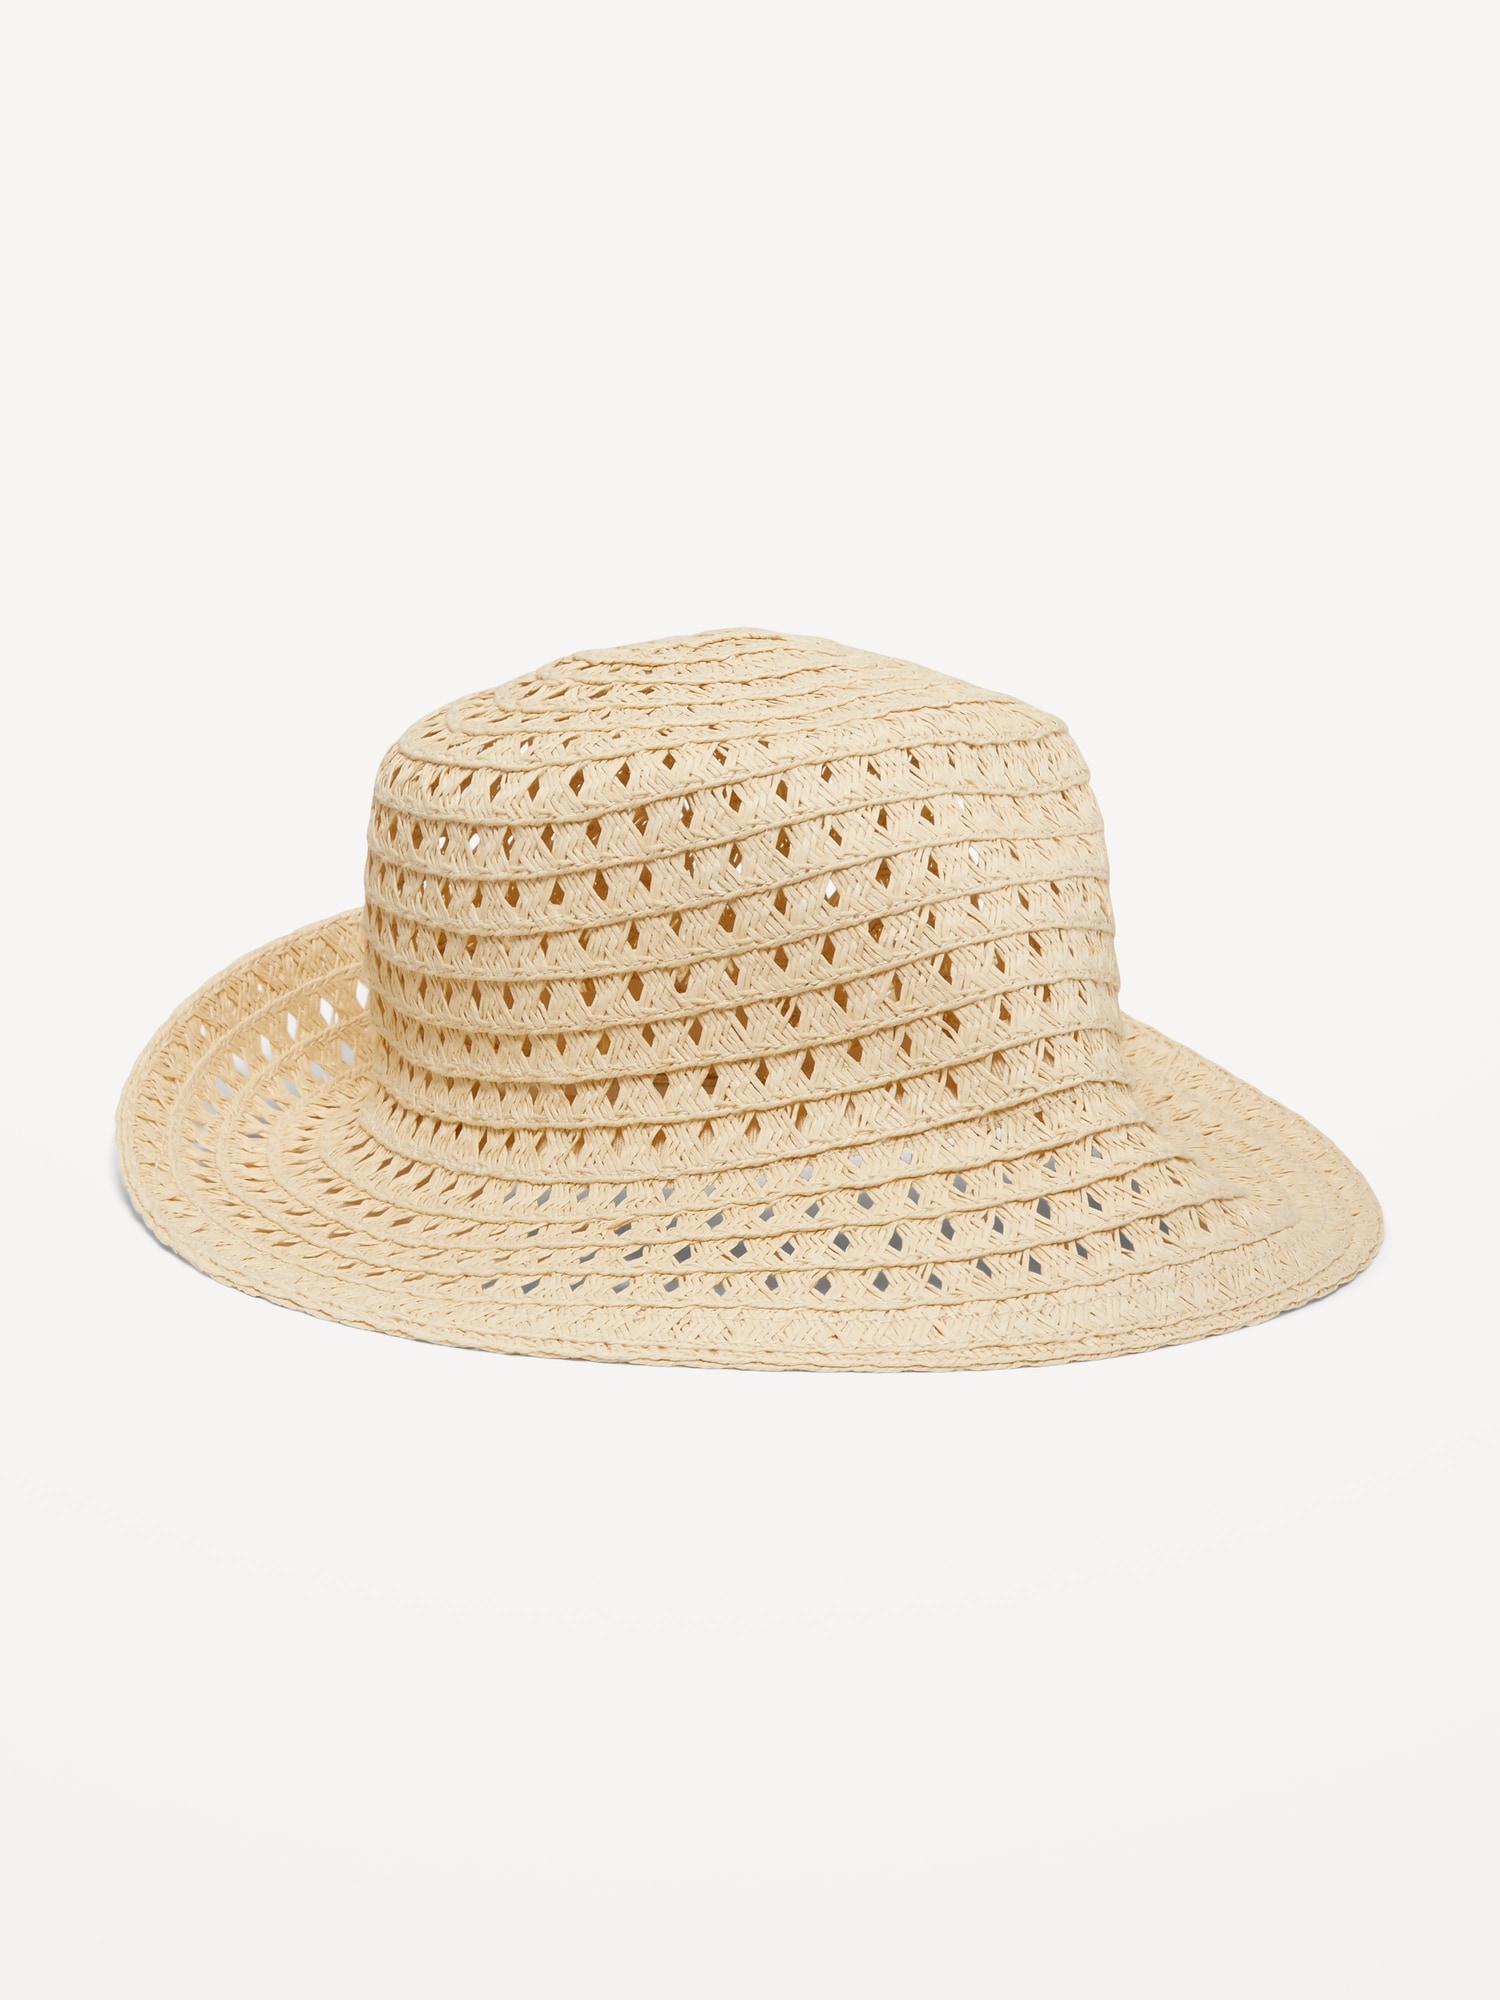 Old Navy Straw Bucket Hat for Girls white. 1